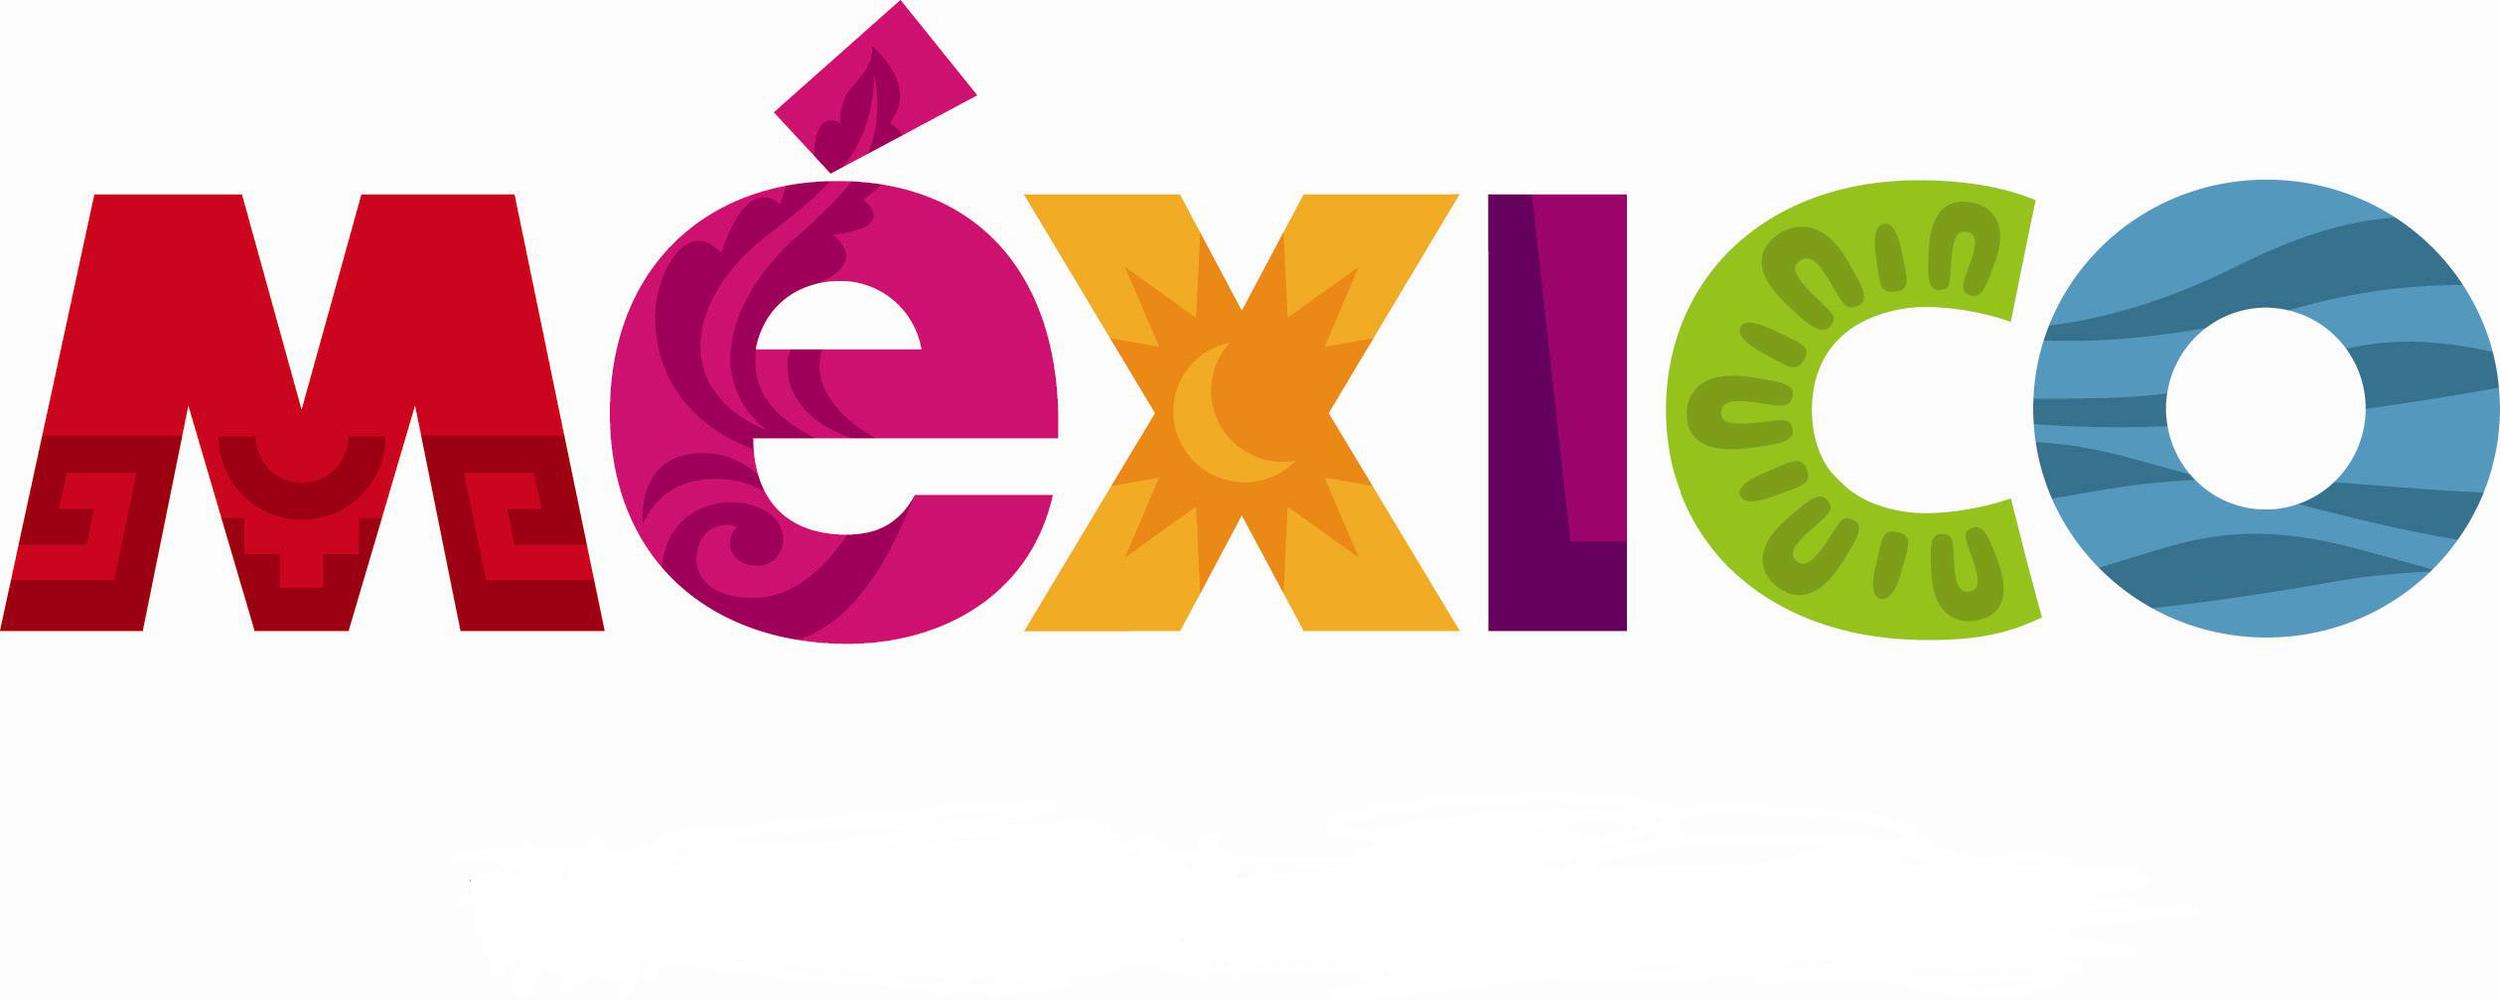 All-Inclusive-Mexico-Holidays-Mexico-Logo.jpg